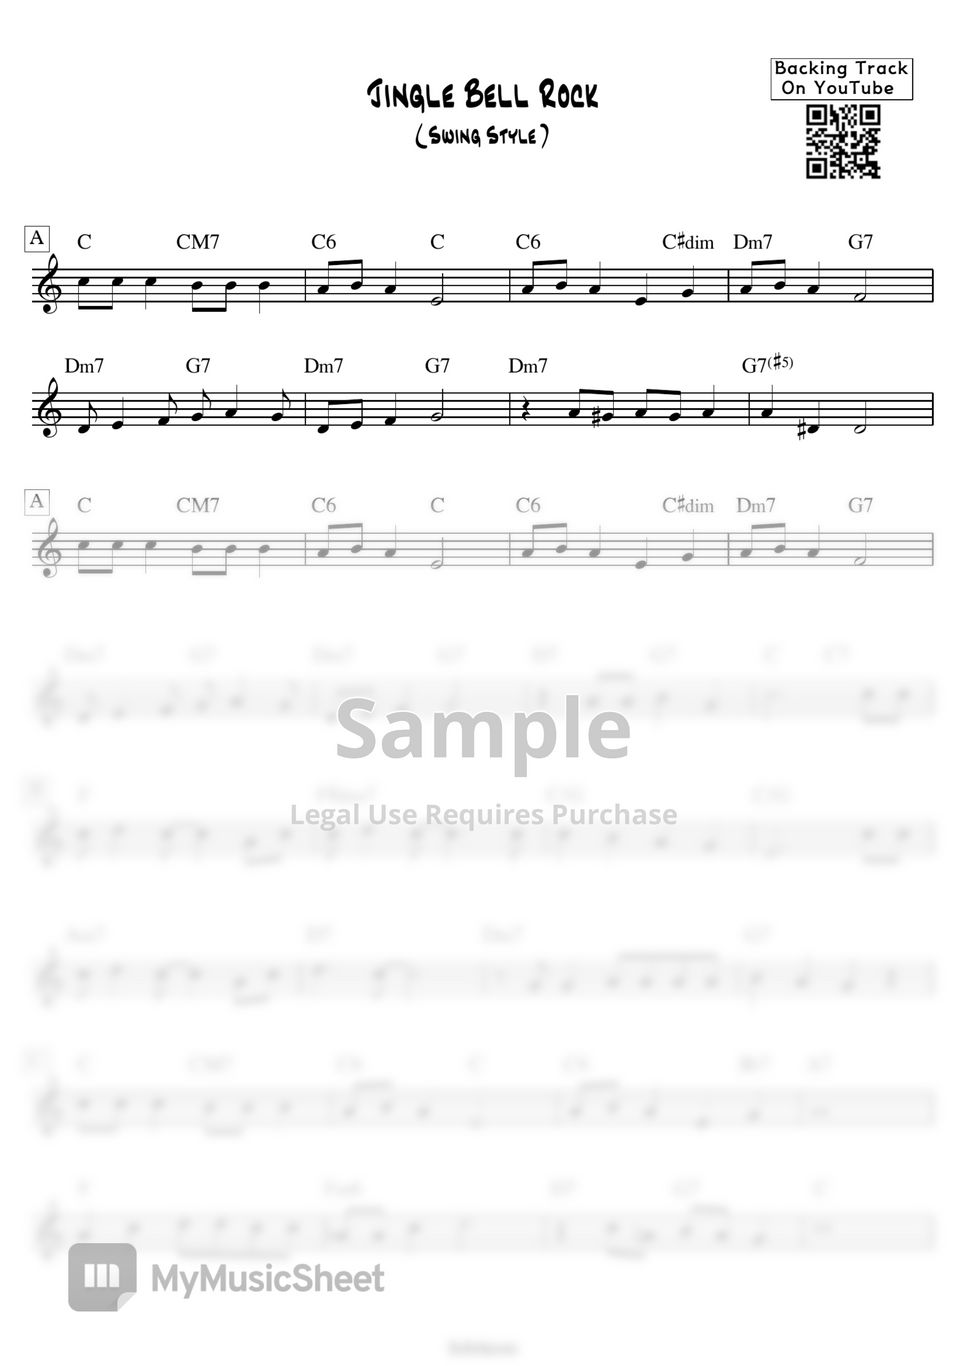 Carol - Jingle Bell Rock / Jazz Backing Track (Swing Style) by BaBoSound